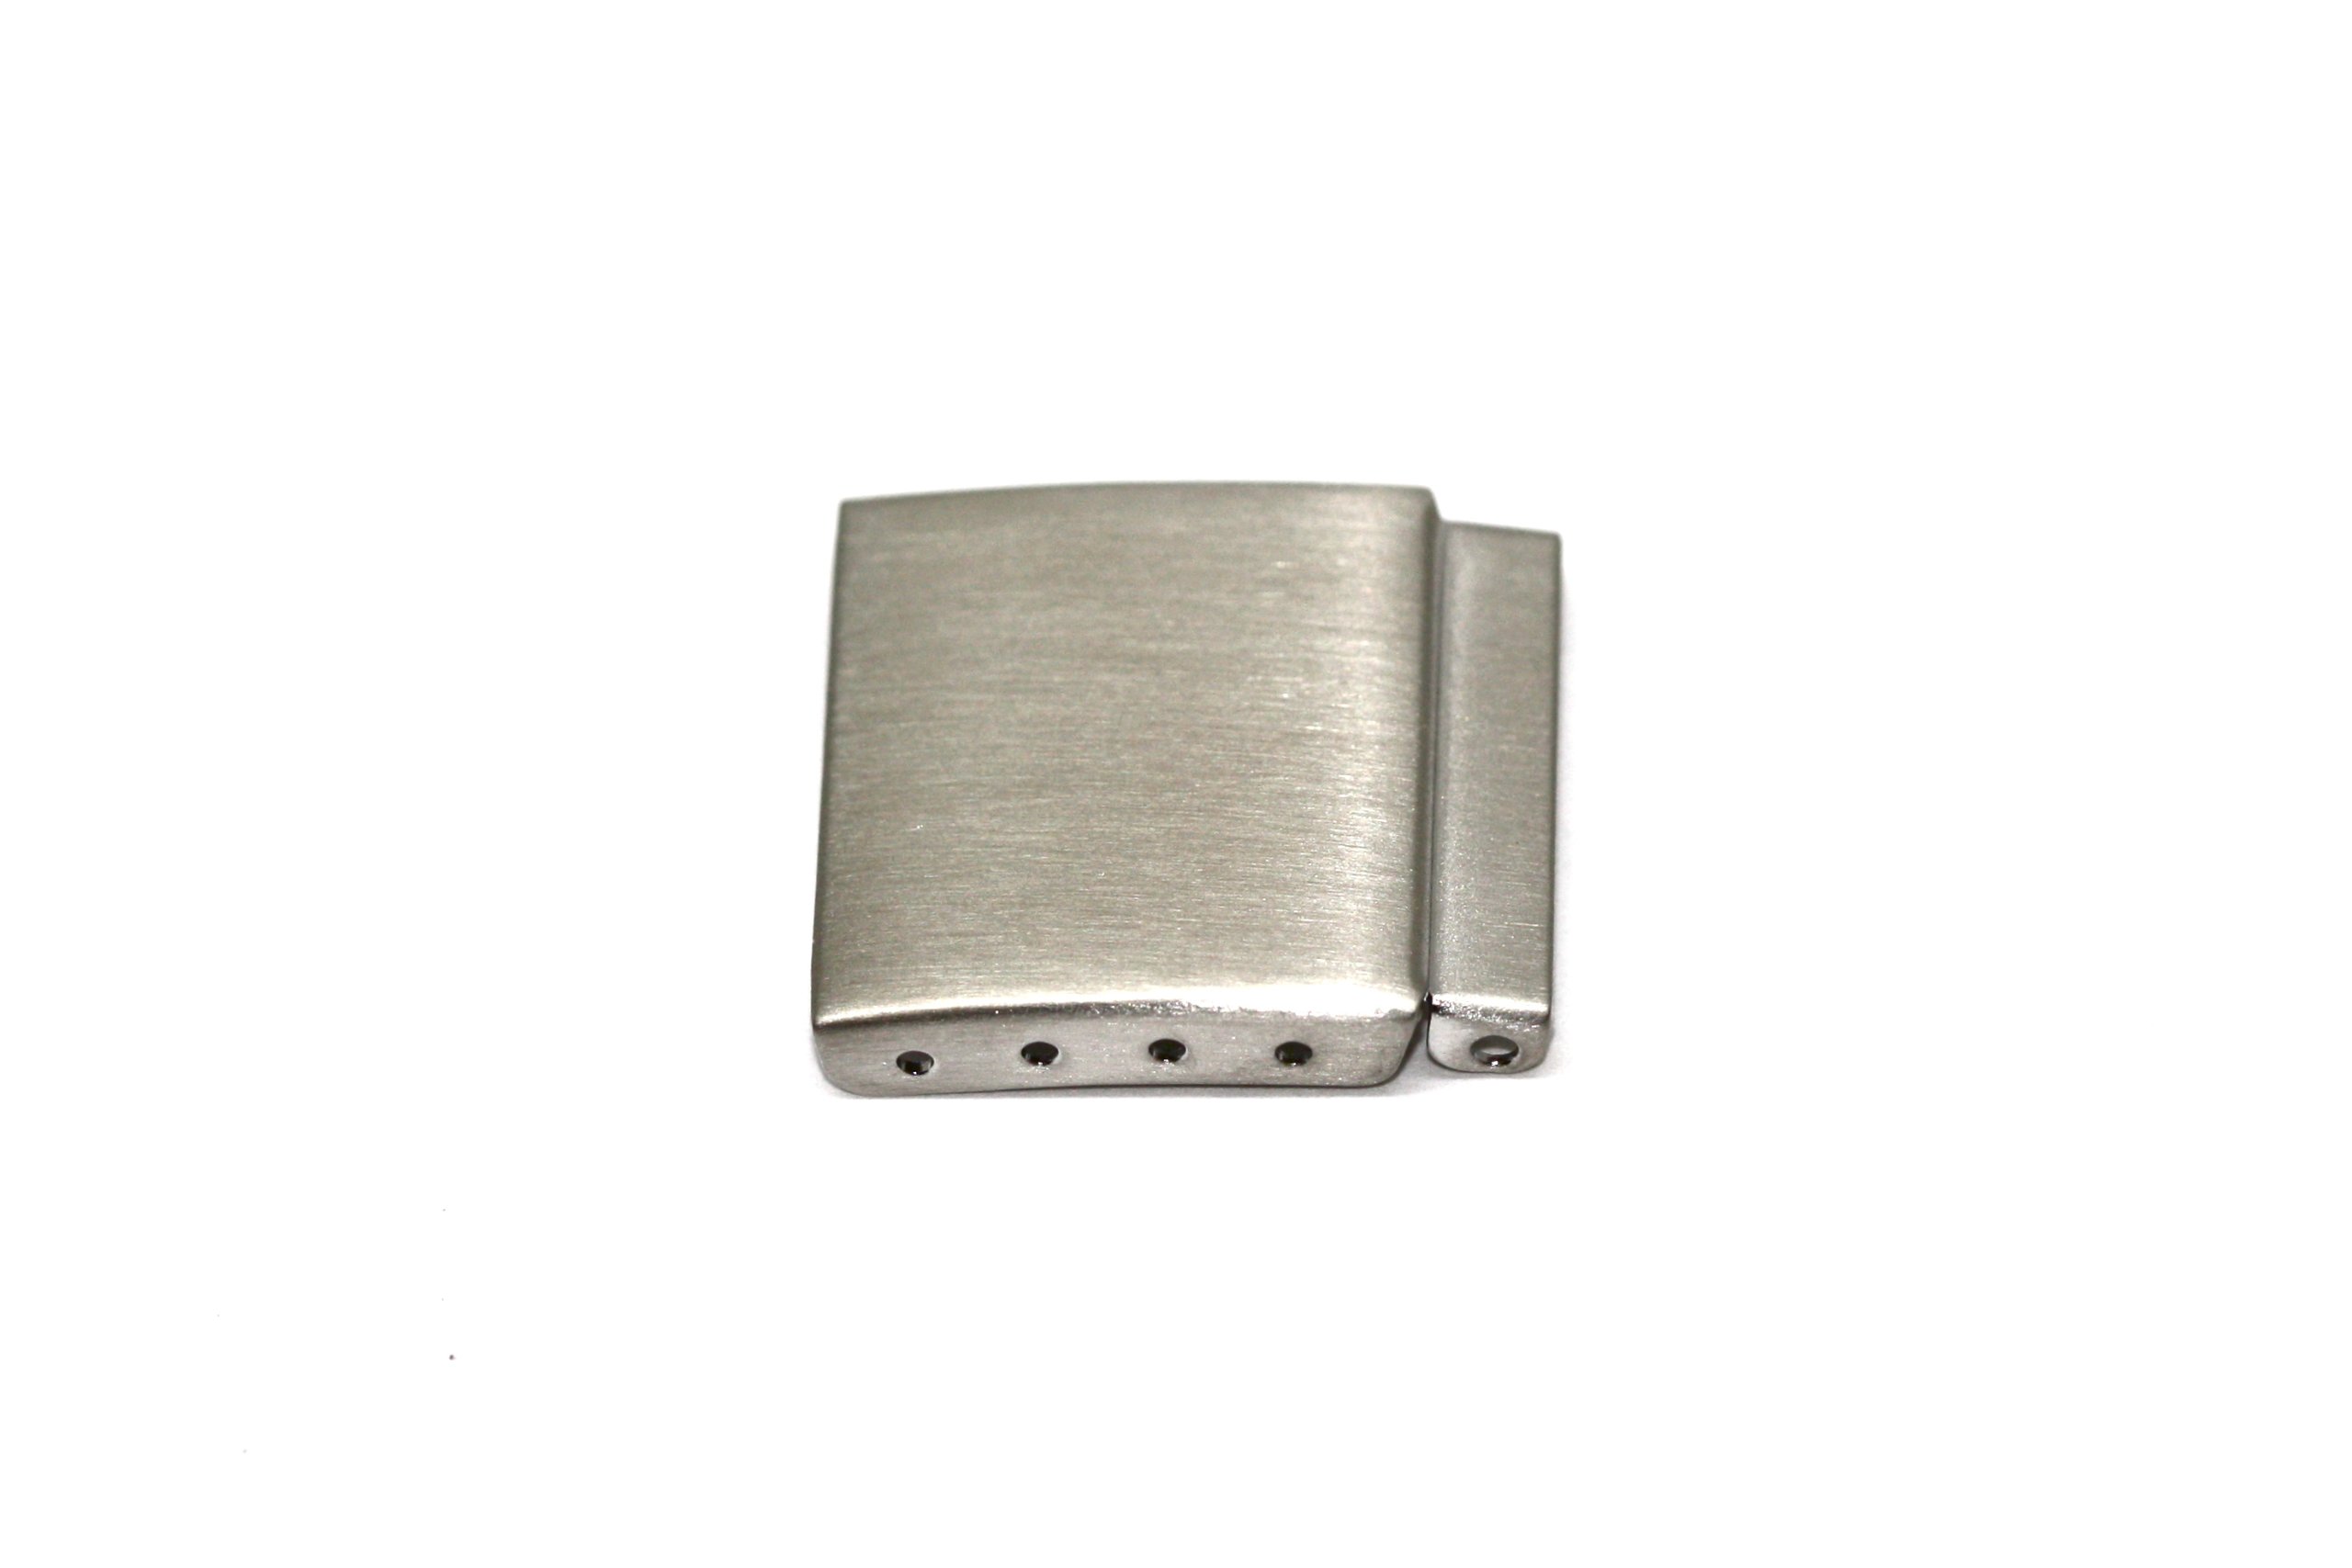 Cuir De Lyon 18MM Stainless Steel Silver Watch Band Bracelet Clasp Buckle Extender